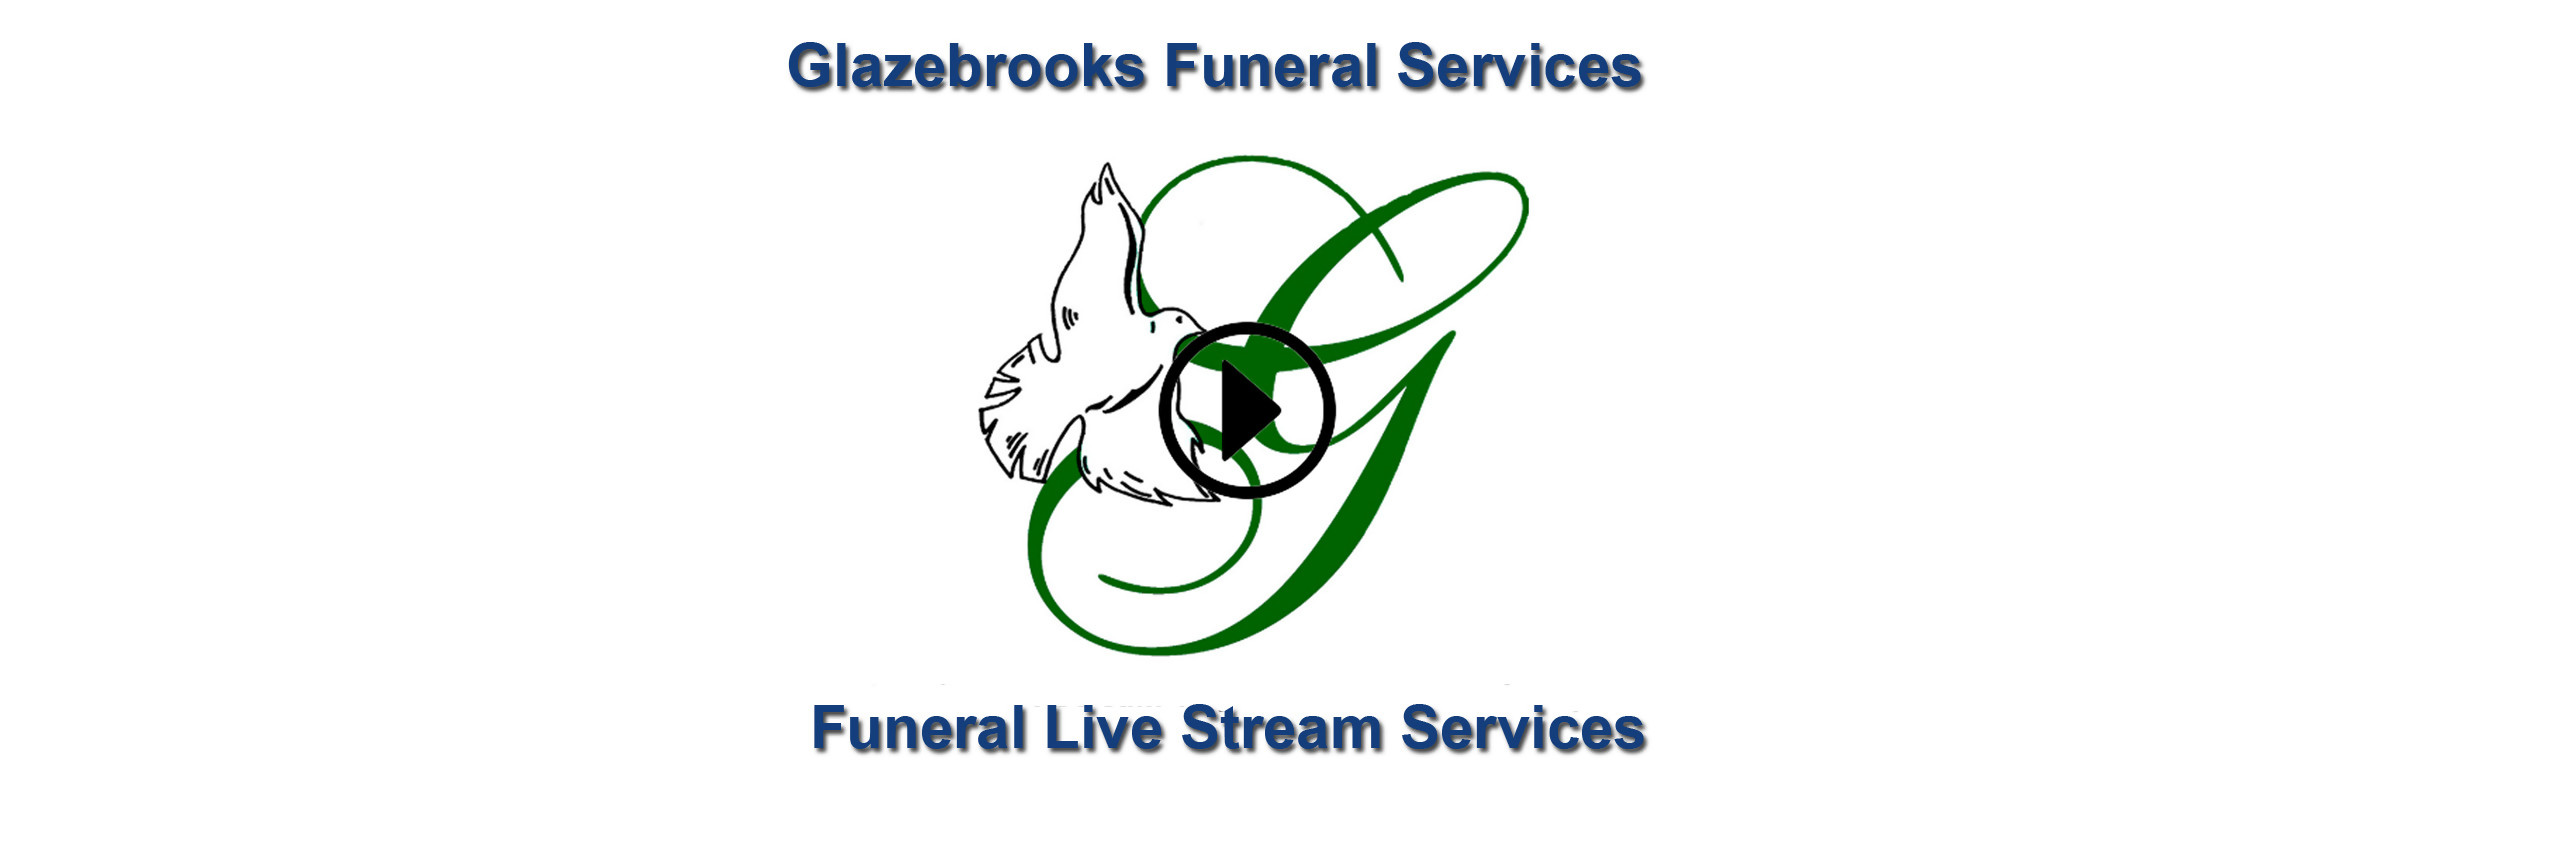 Glazebrooks Funeral Live Stream Services